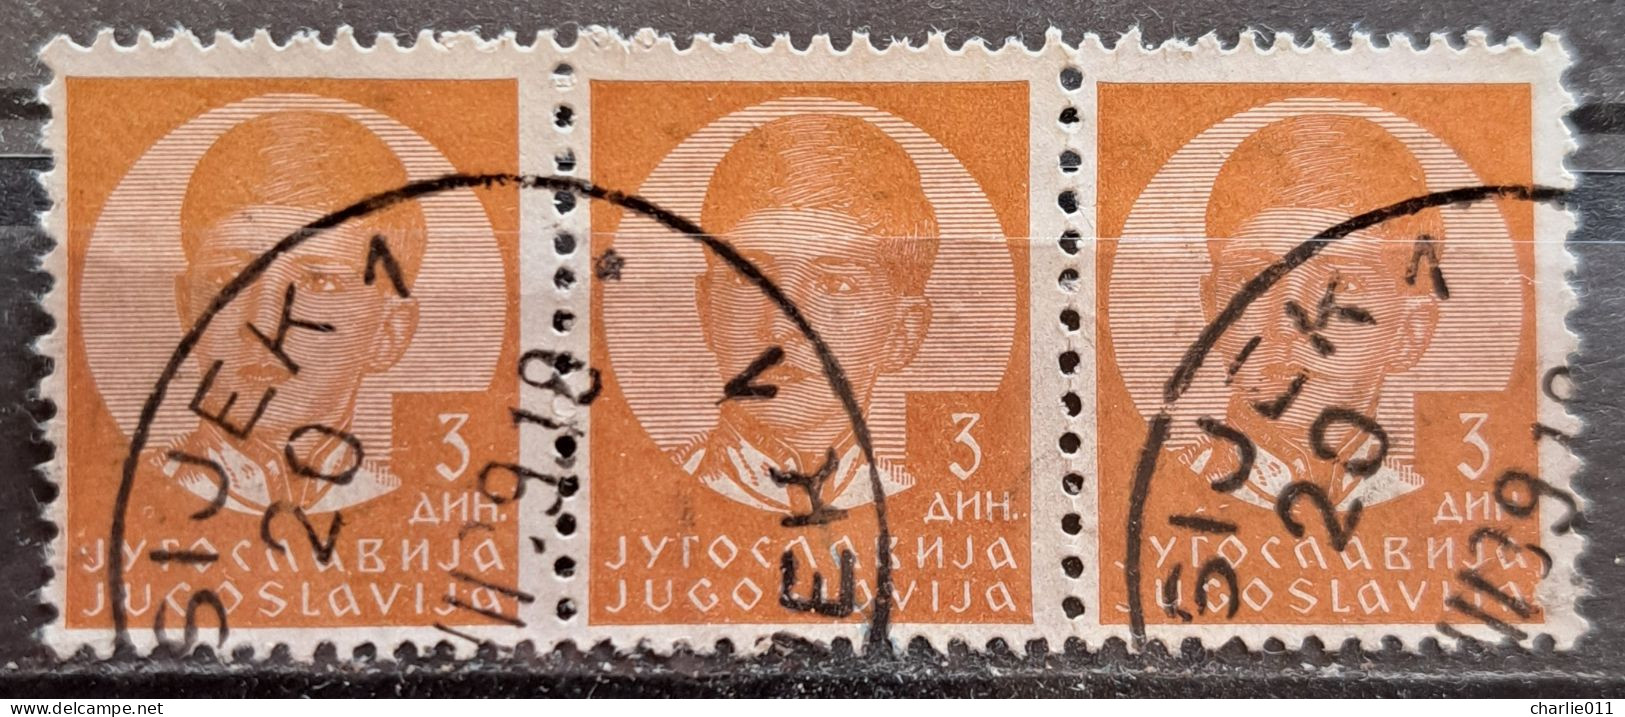 KING PETER II-3 DIN.-3 IN RAW-POSTMARK OSIJEK-ERROR-CROATIA-YUGOSLAVIA-1939 - Gebruikt